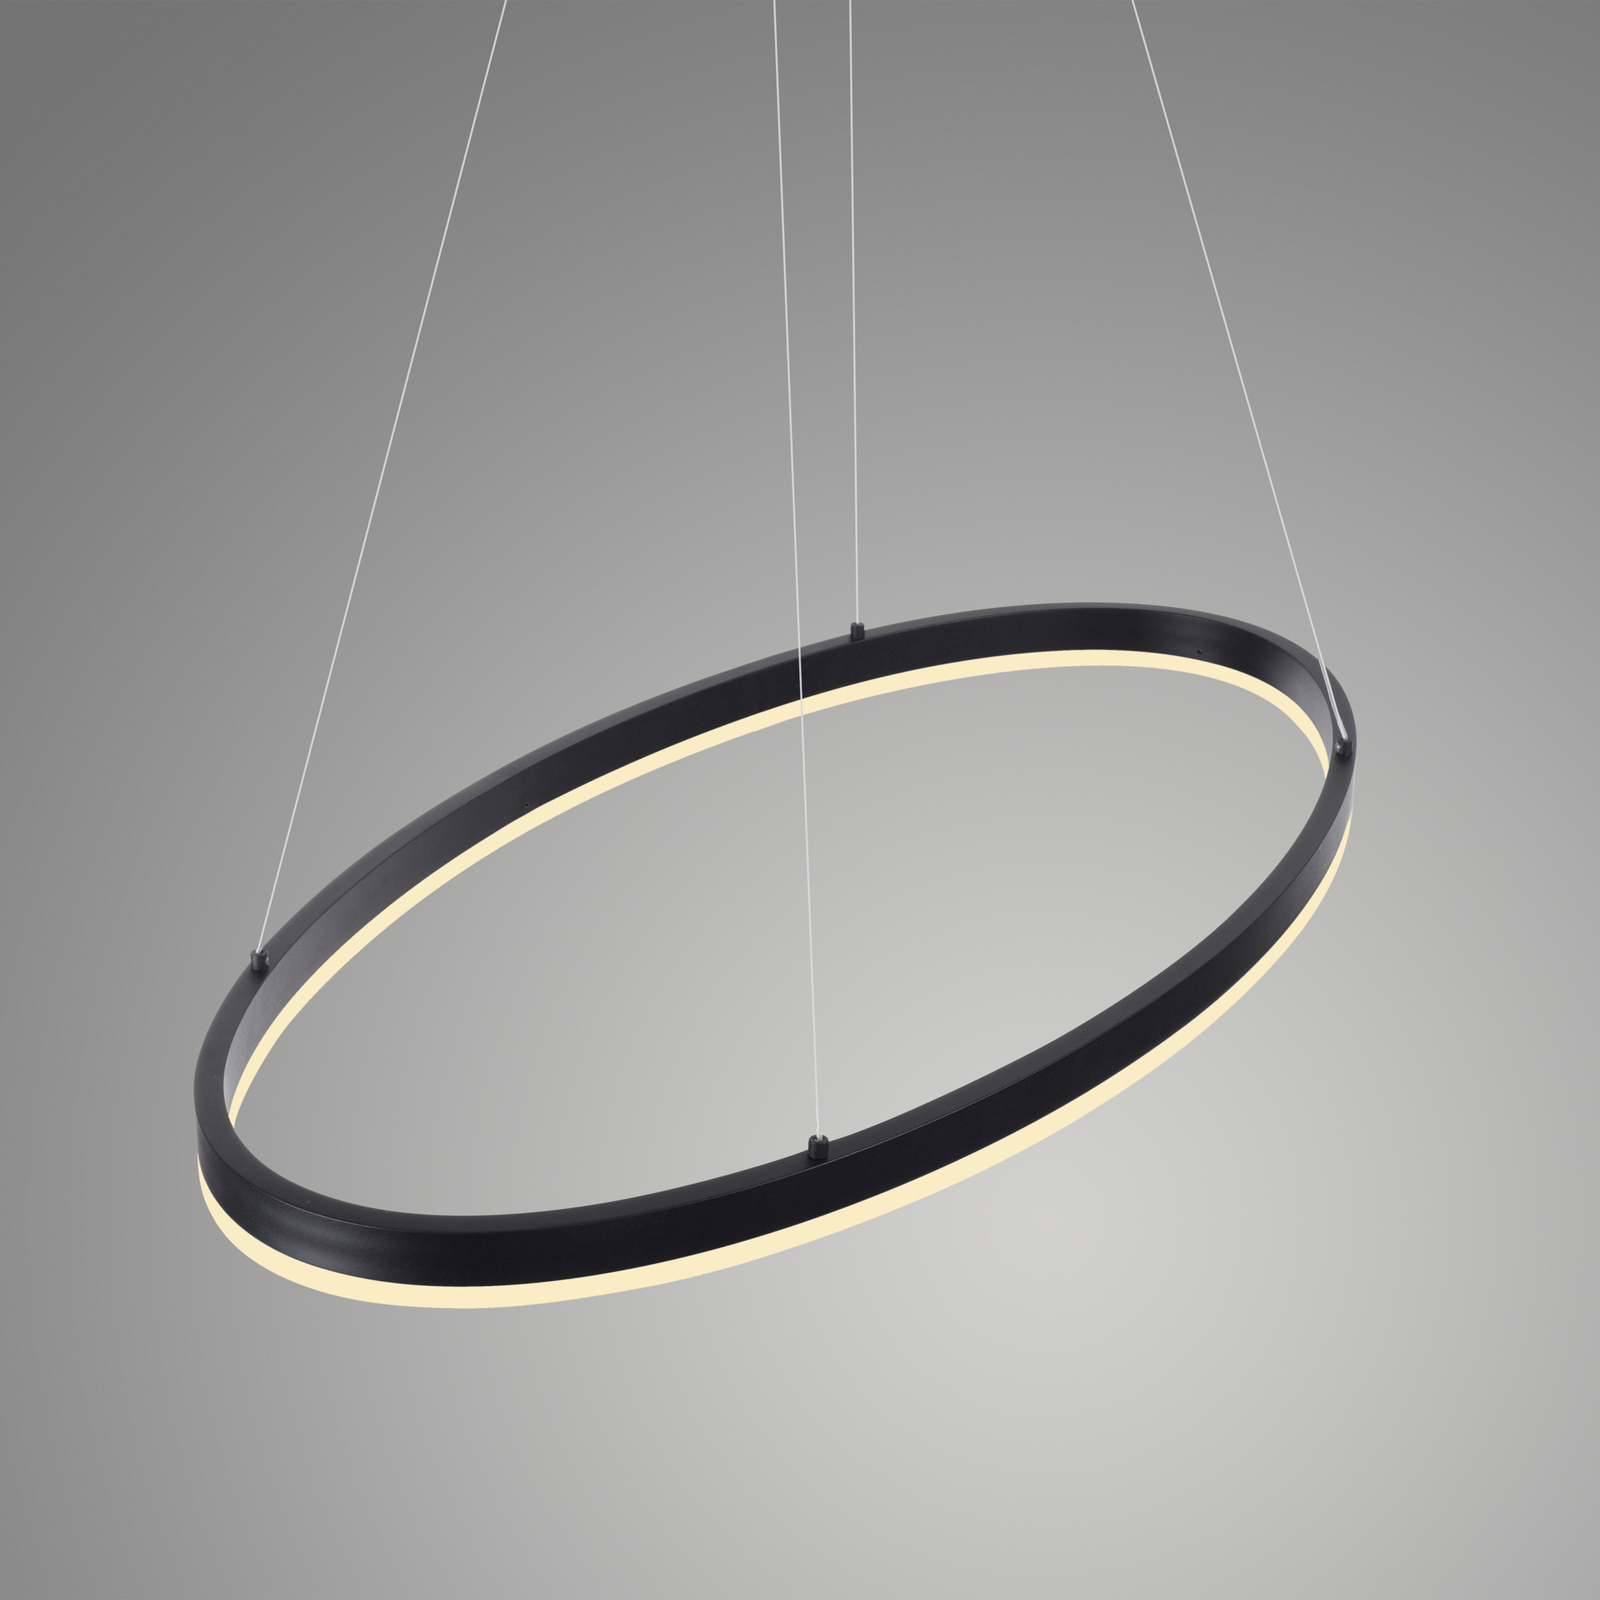 Paul Neuhaus Titus LED-pendel, oval 80x39cm